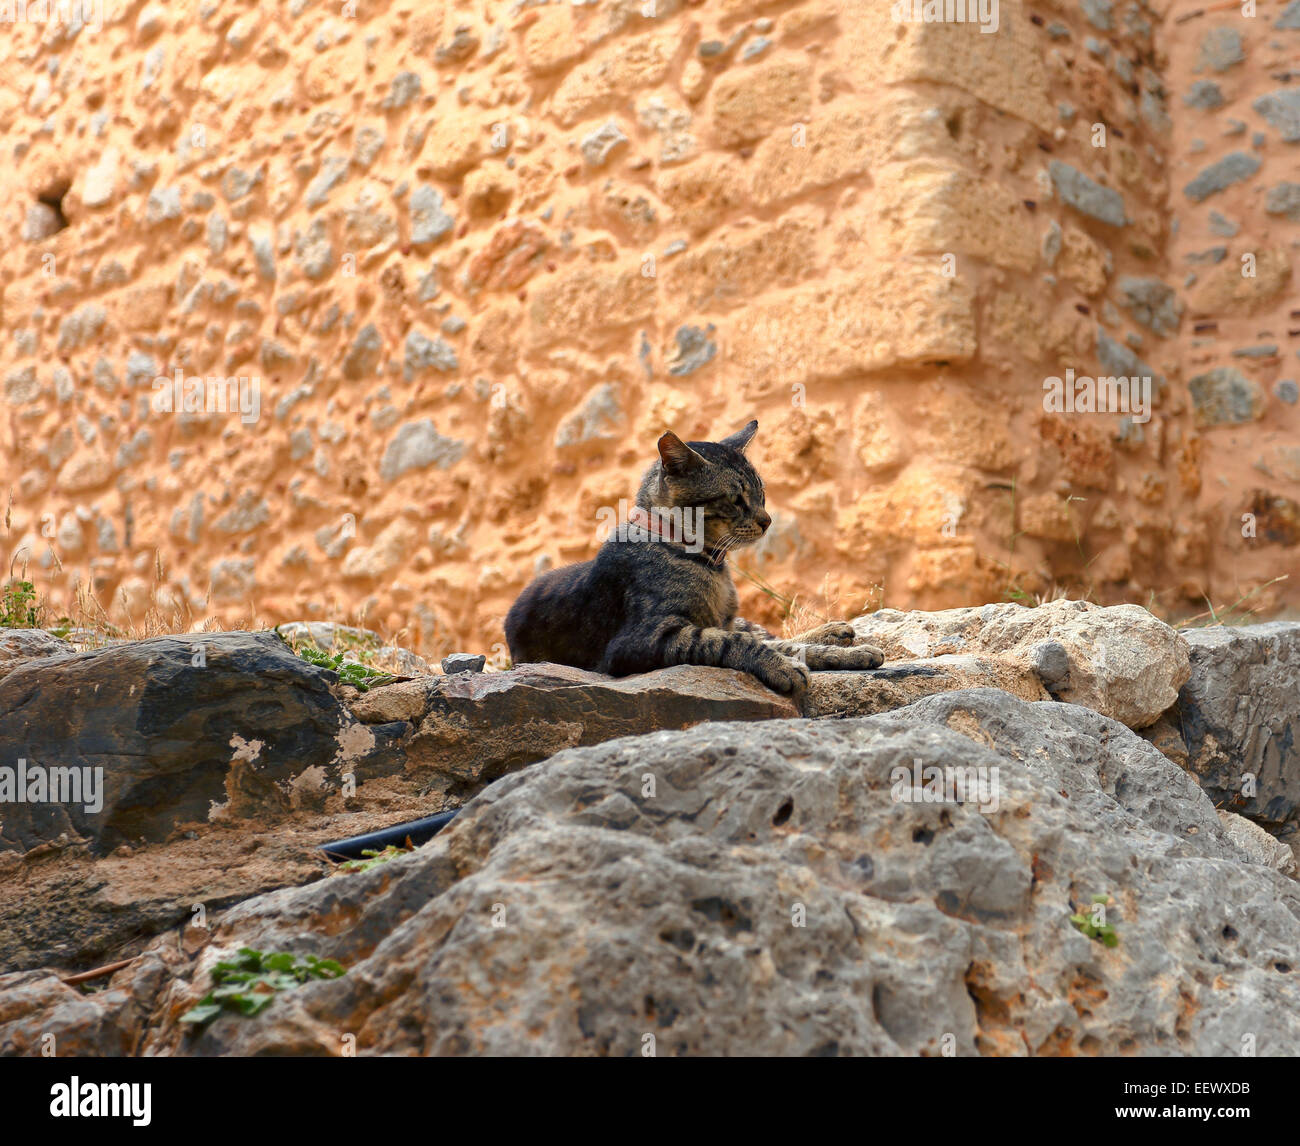 Katze Layling in Steinen Stockfoto